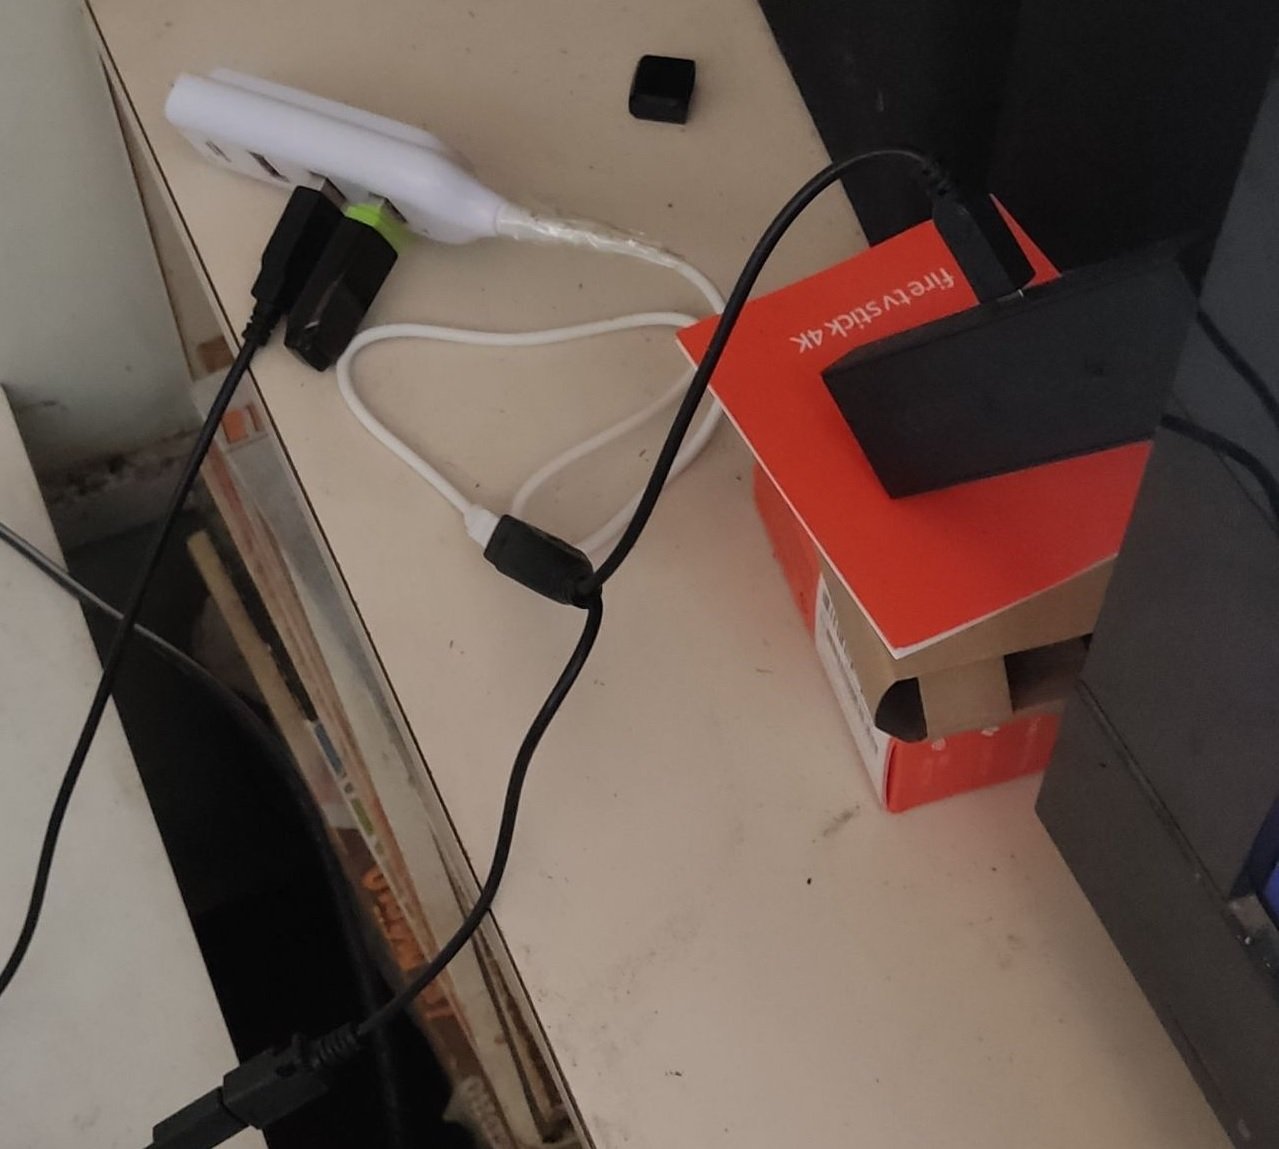 Fire TV Stick: pasos para conectar un pendrive USB